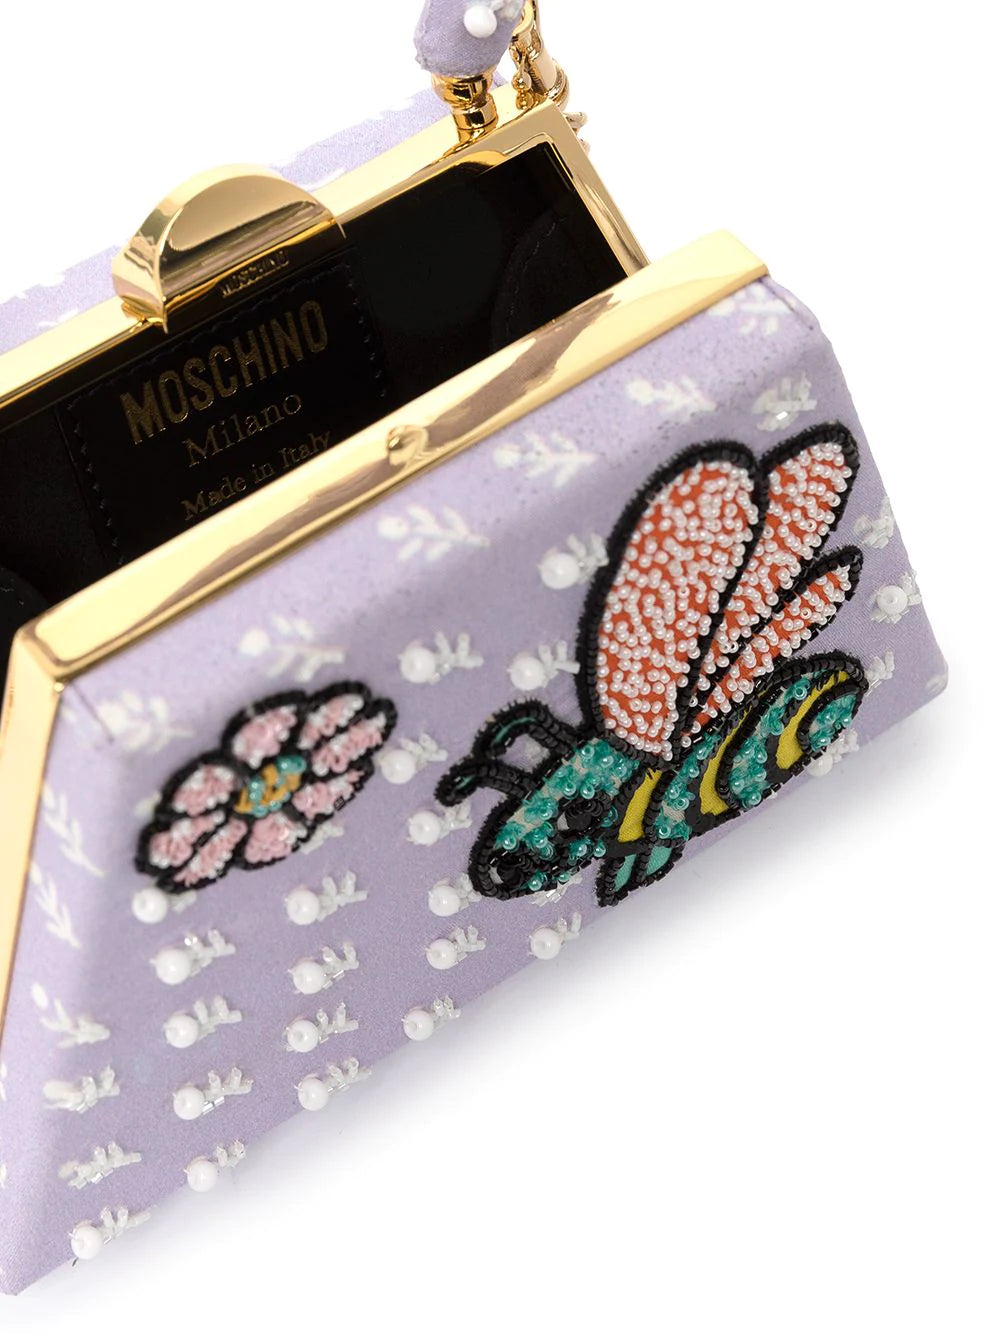 Moschino Beaded Bumblebee Mini Handbag